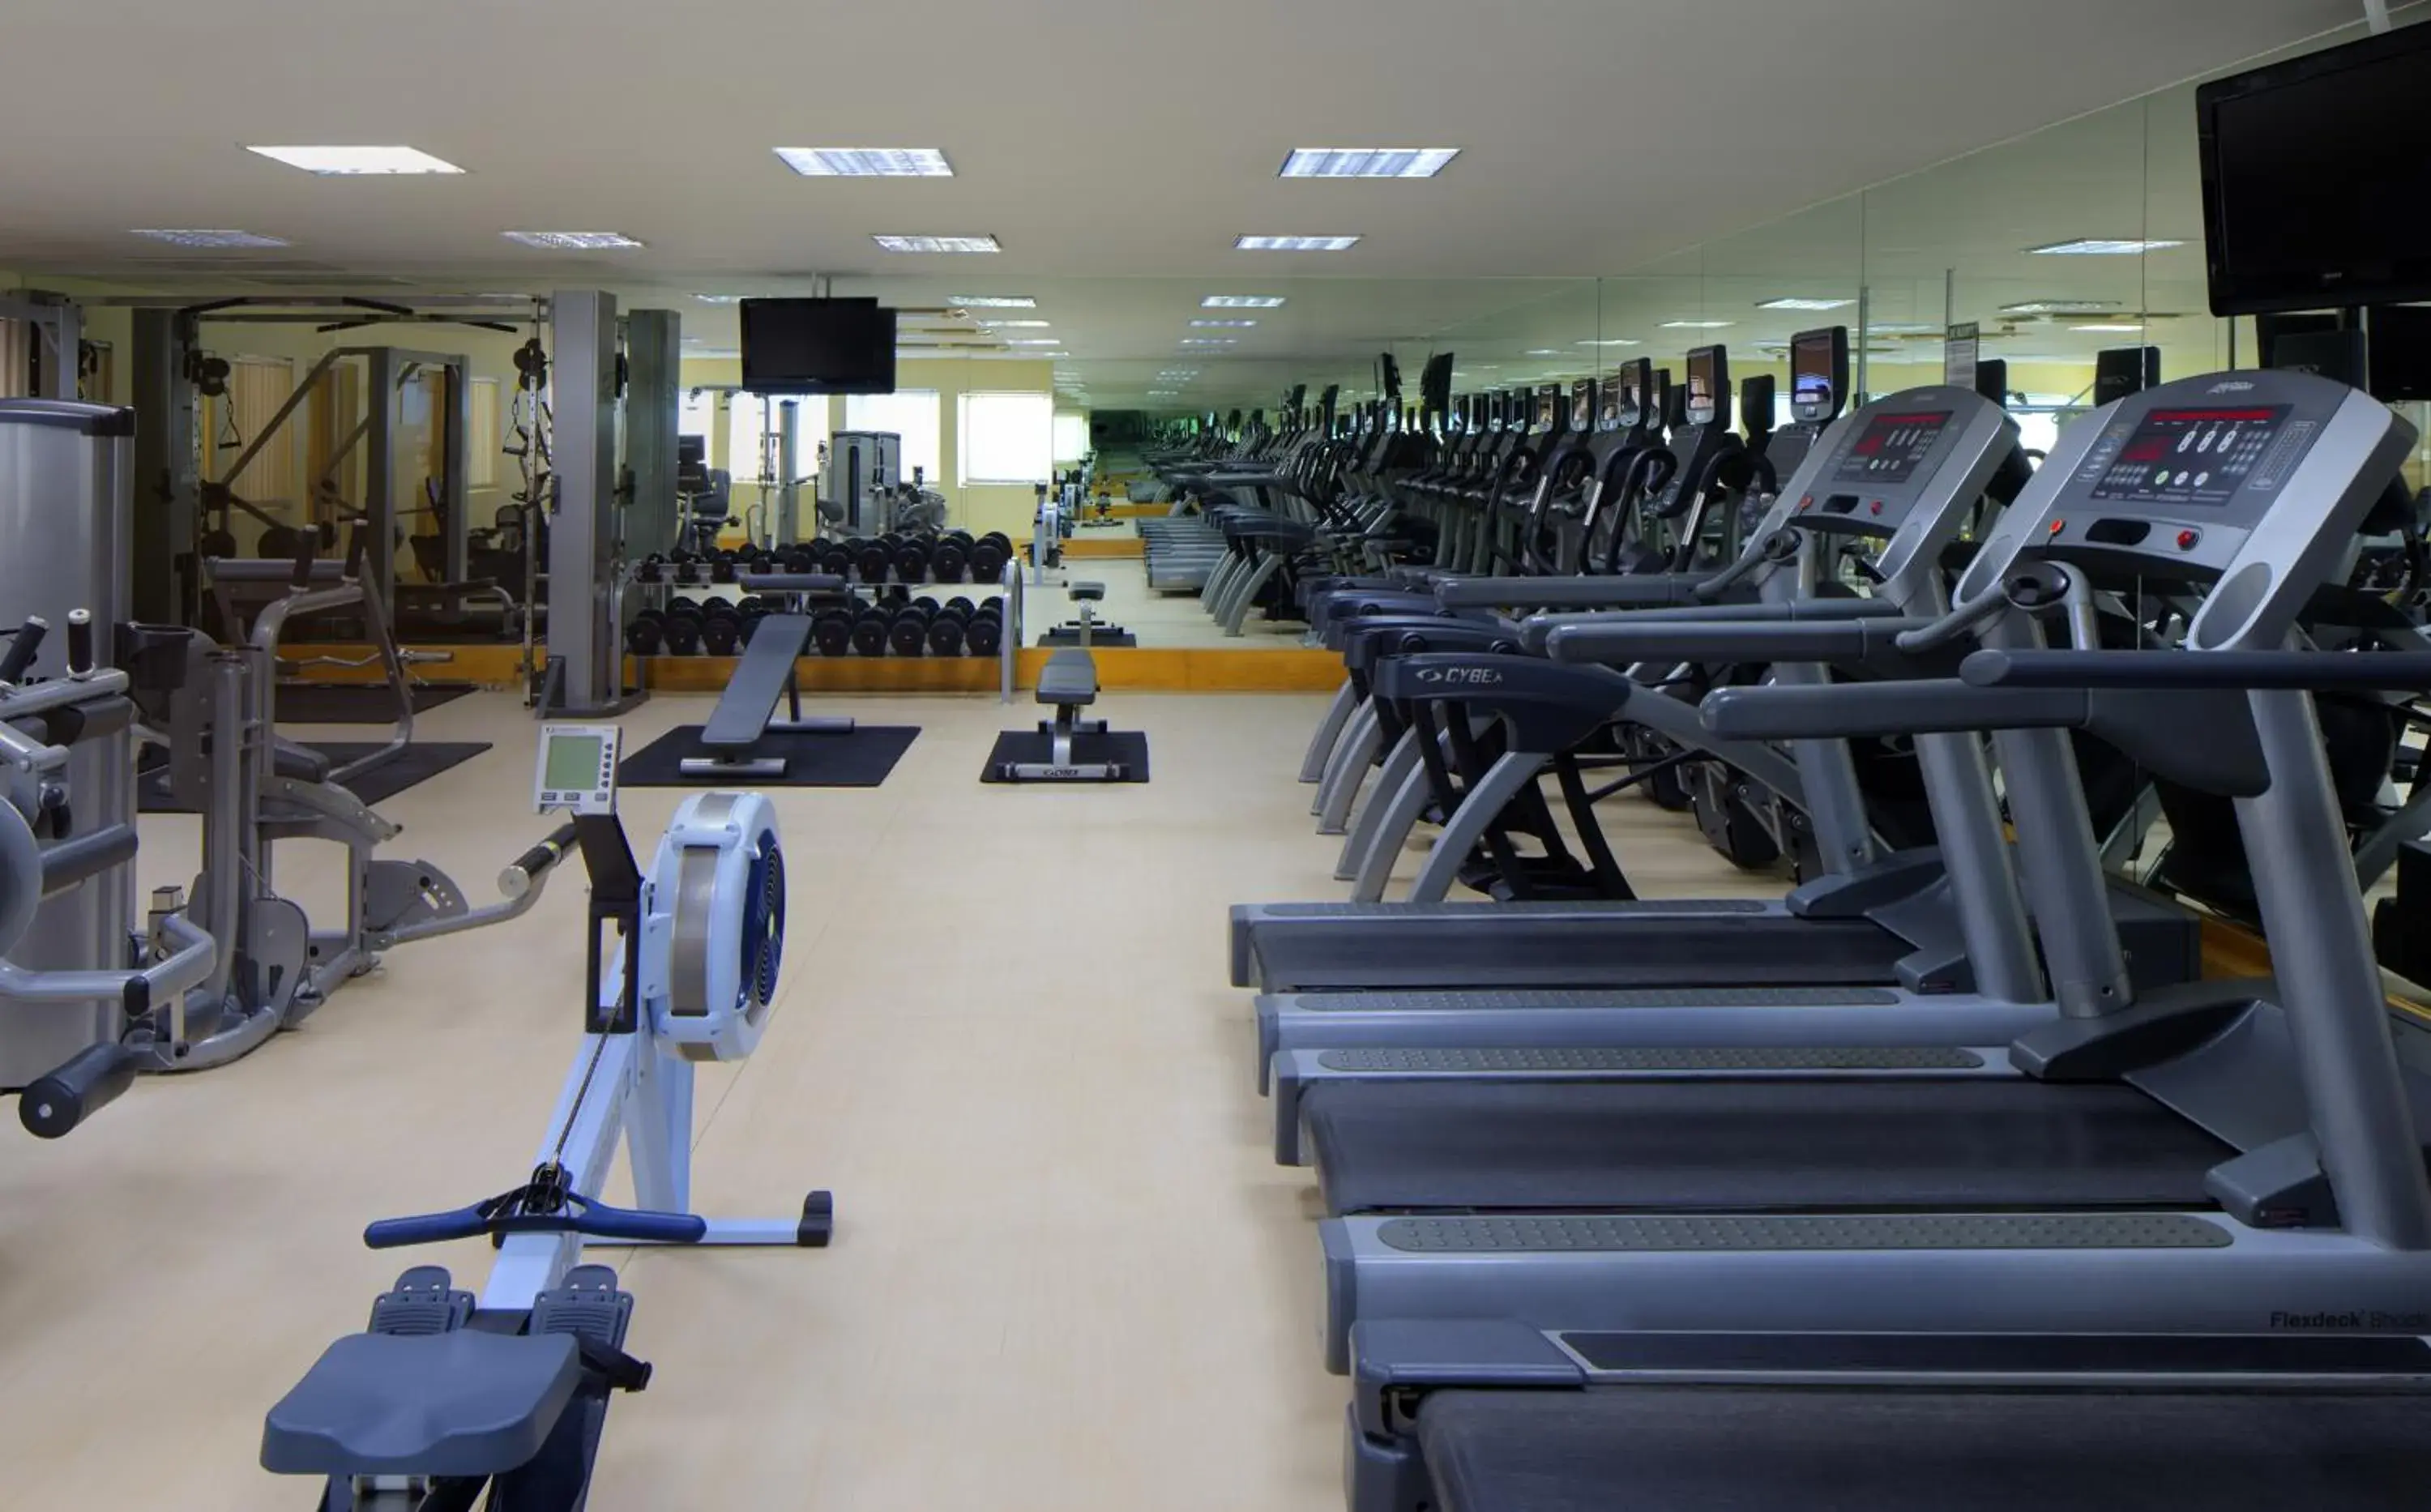 Fitness centre/facilities, Fitness Center/Facilities in Radisson Blu Hotel, Muscat